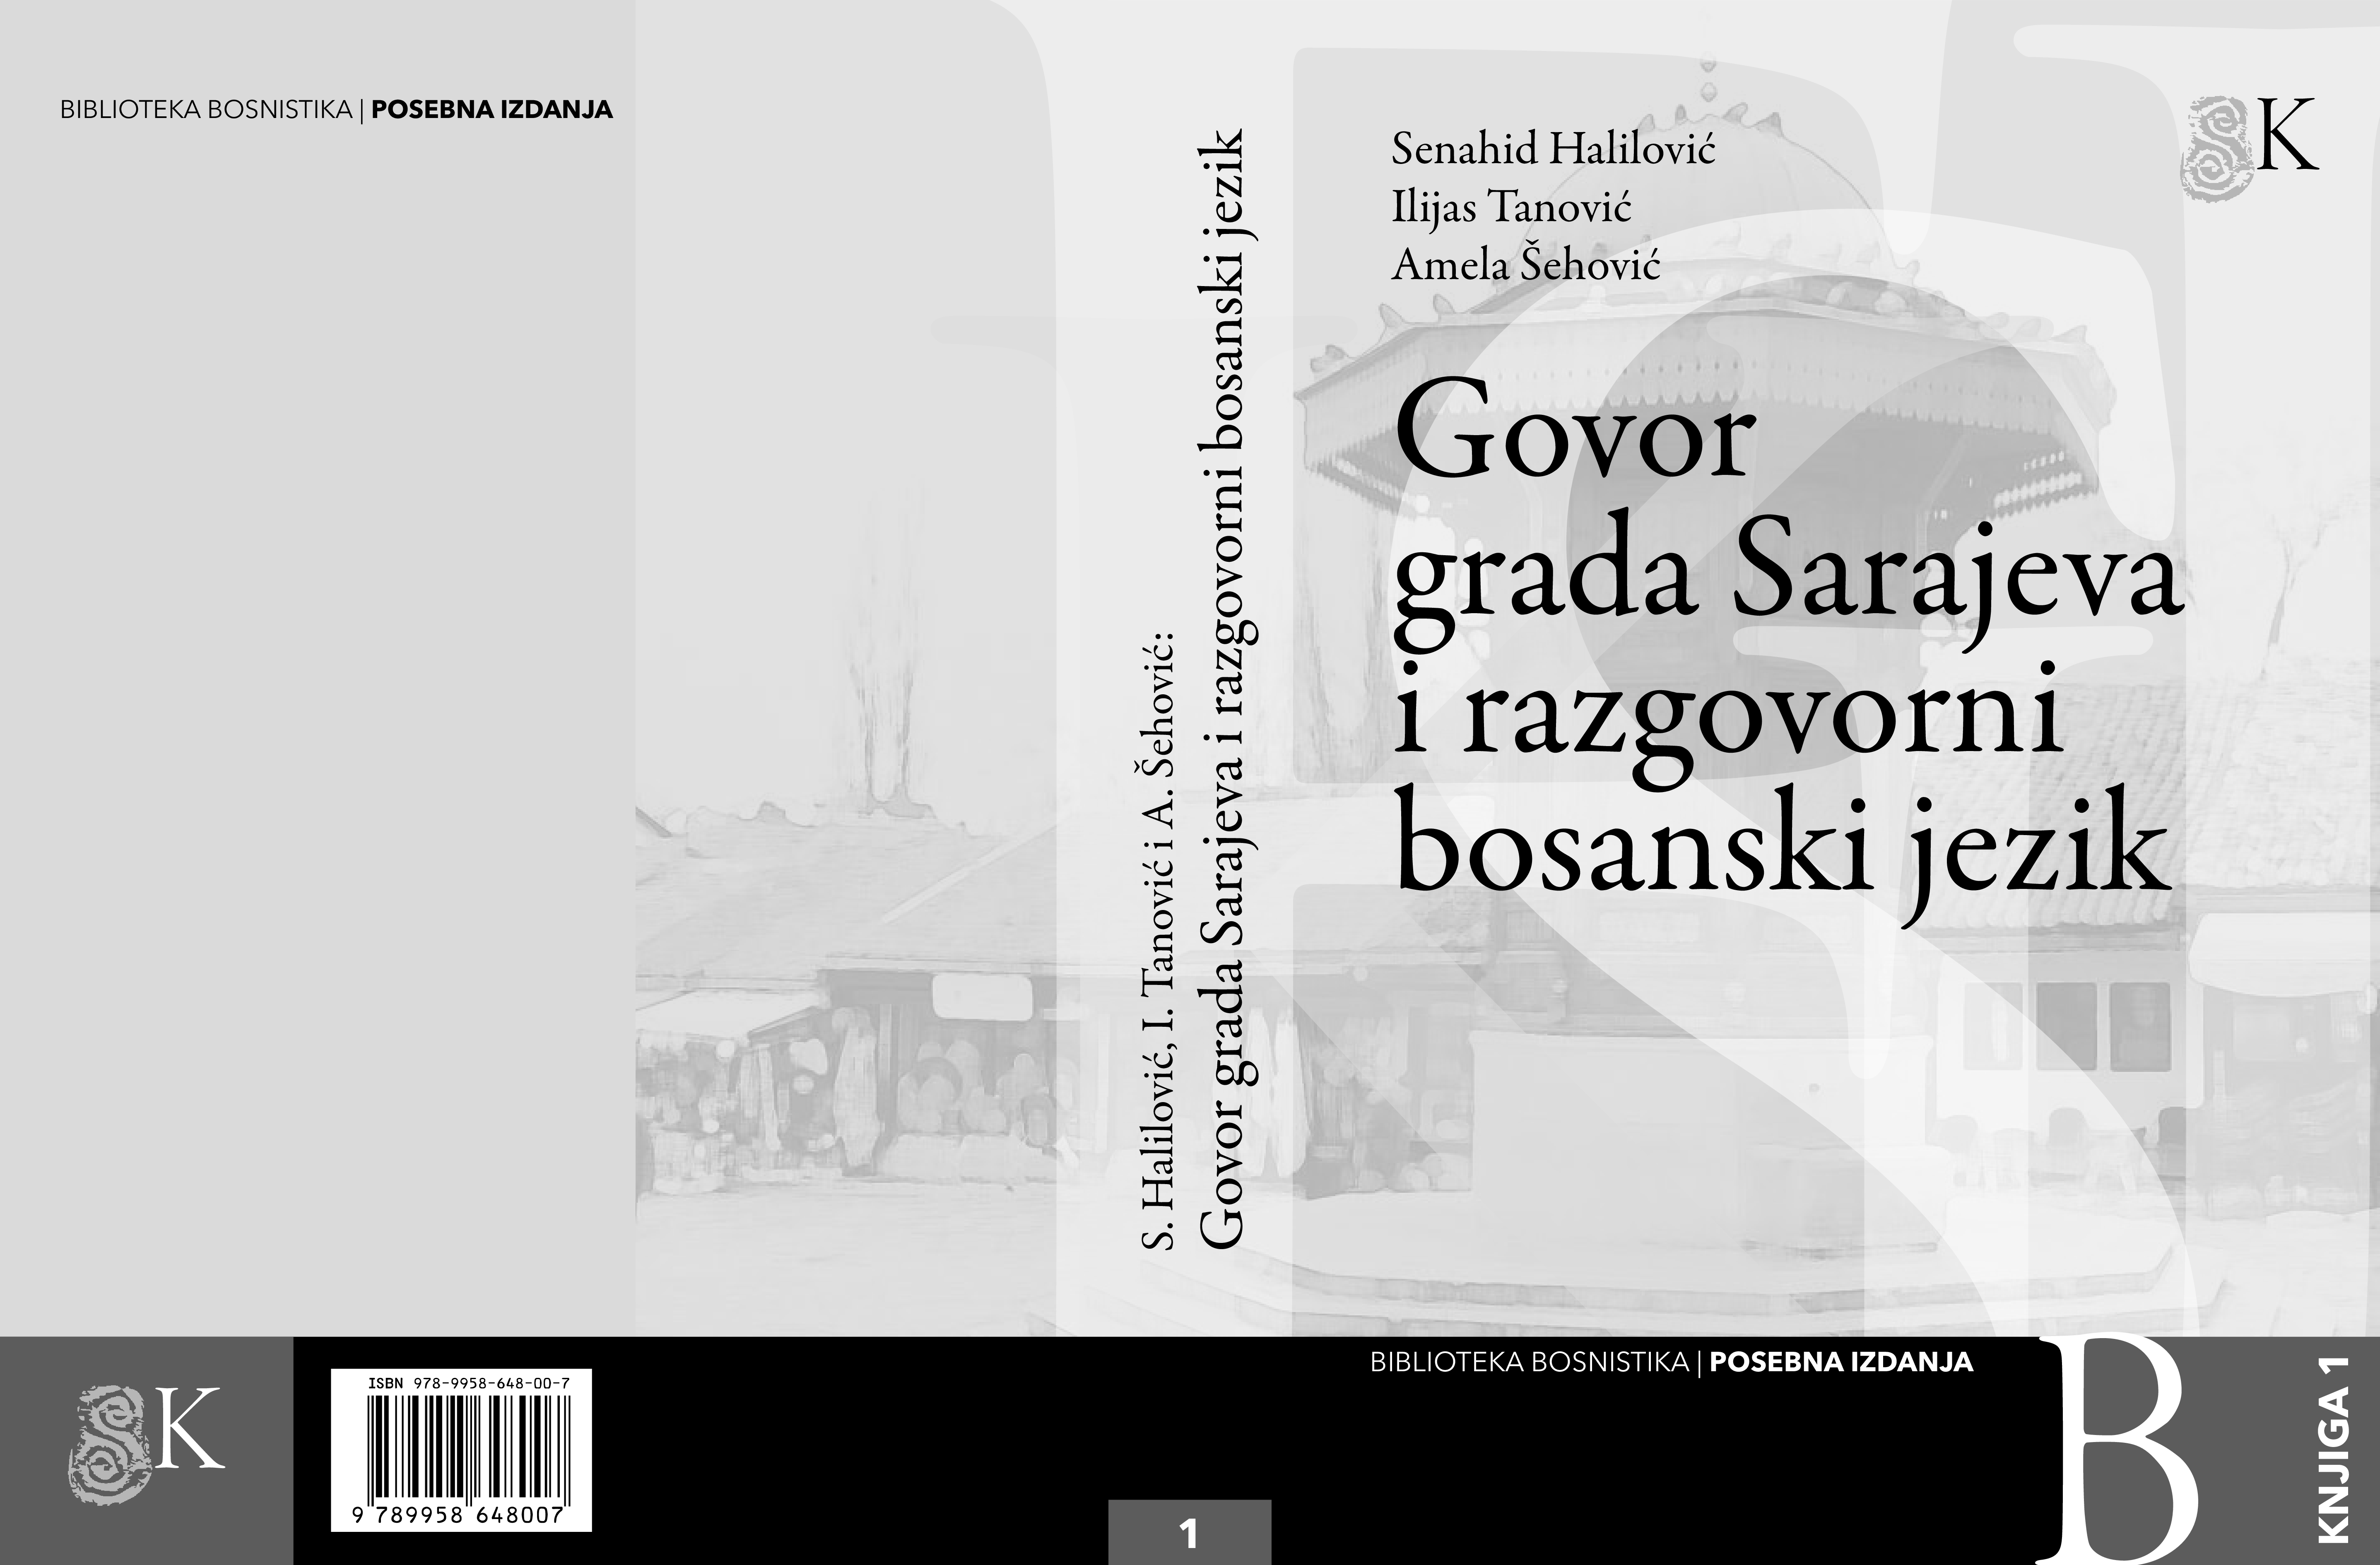 Govor grada Sarajeva i razgovorni bosanski jezik